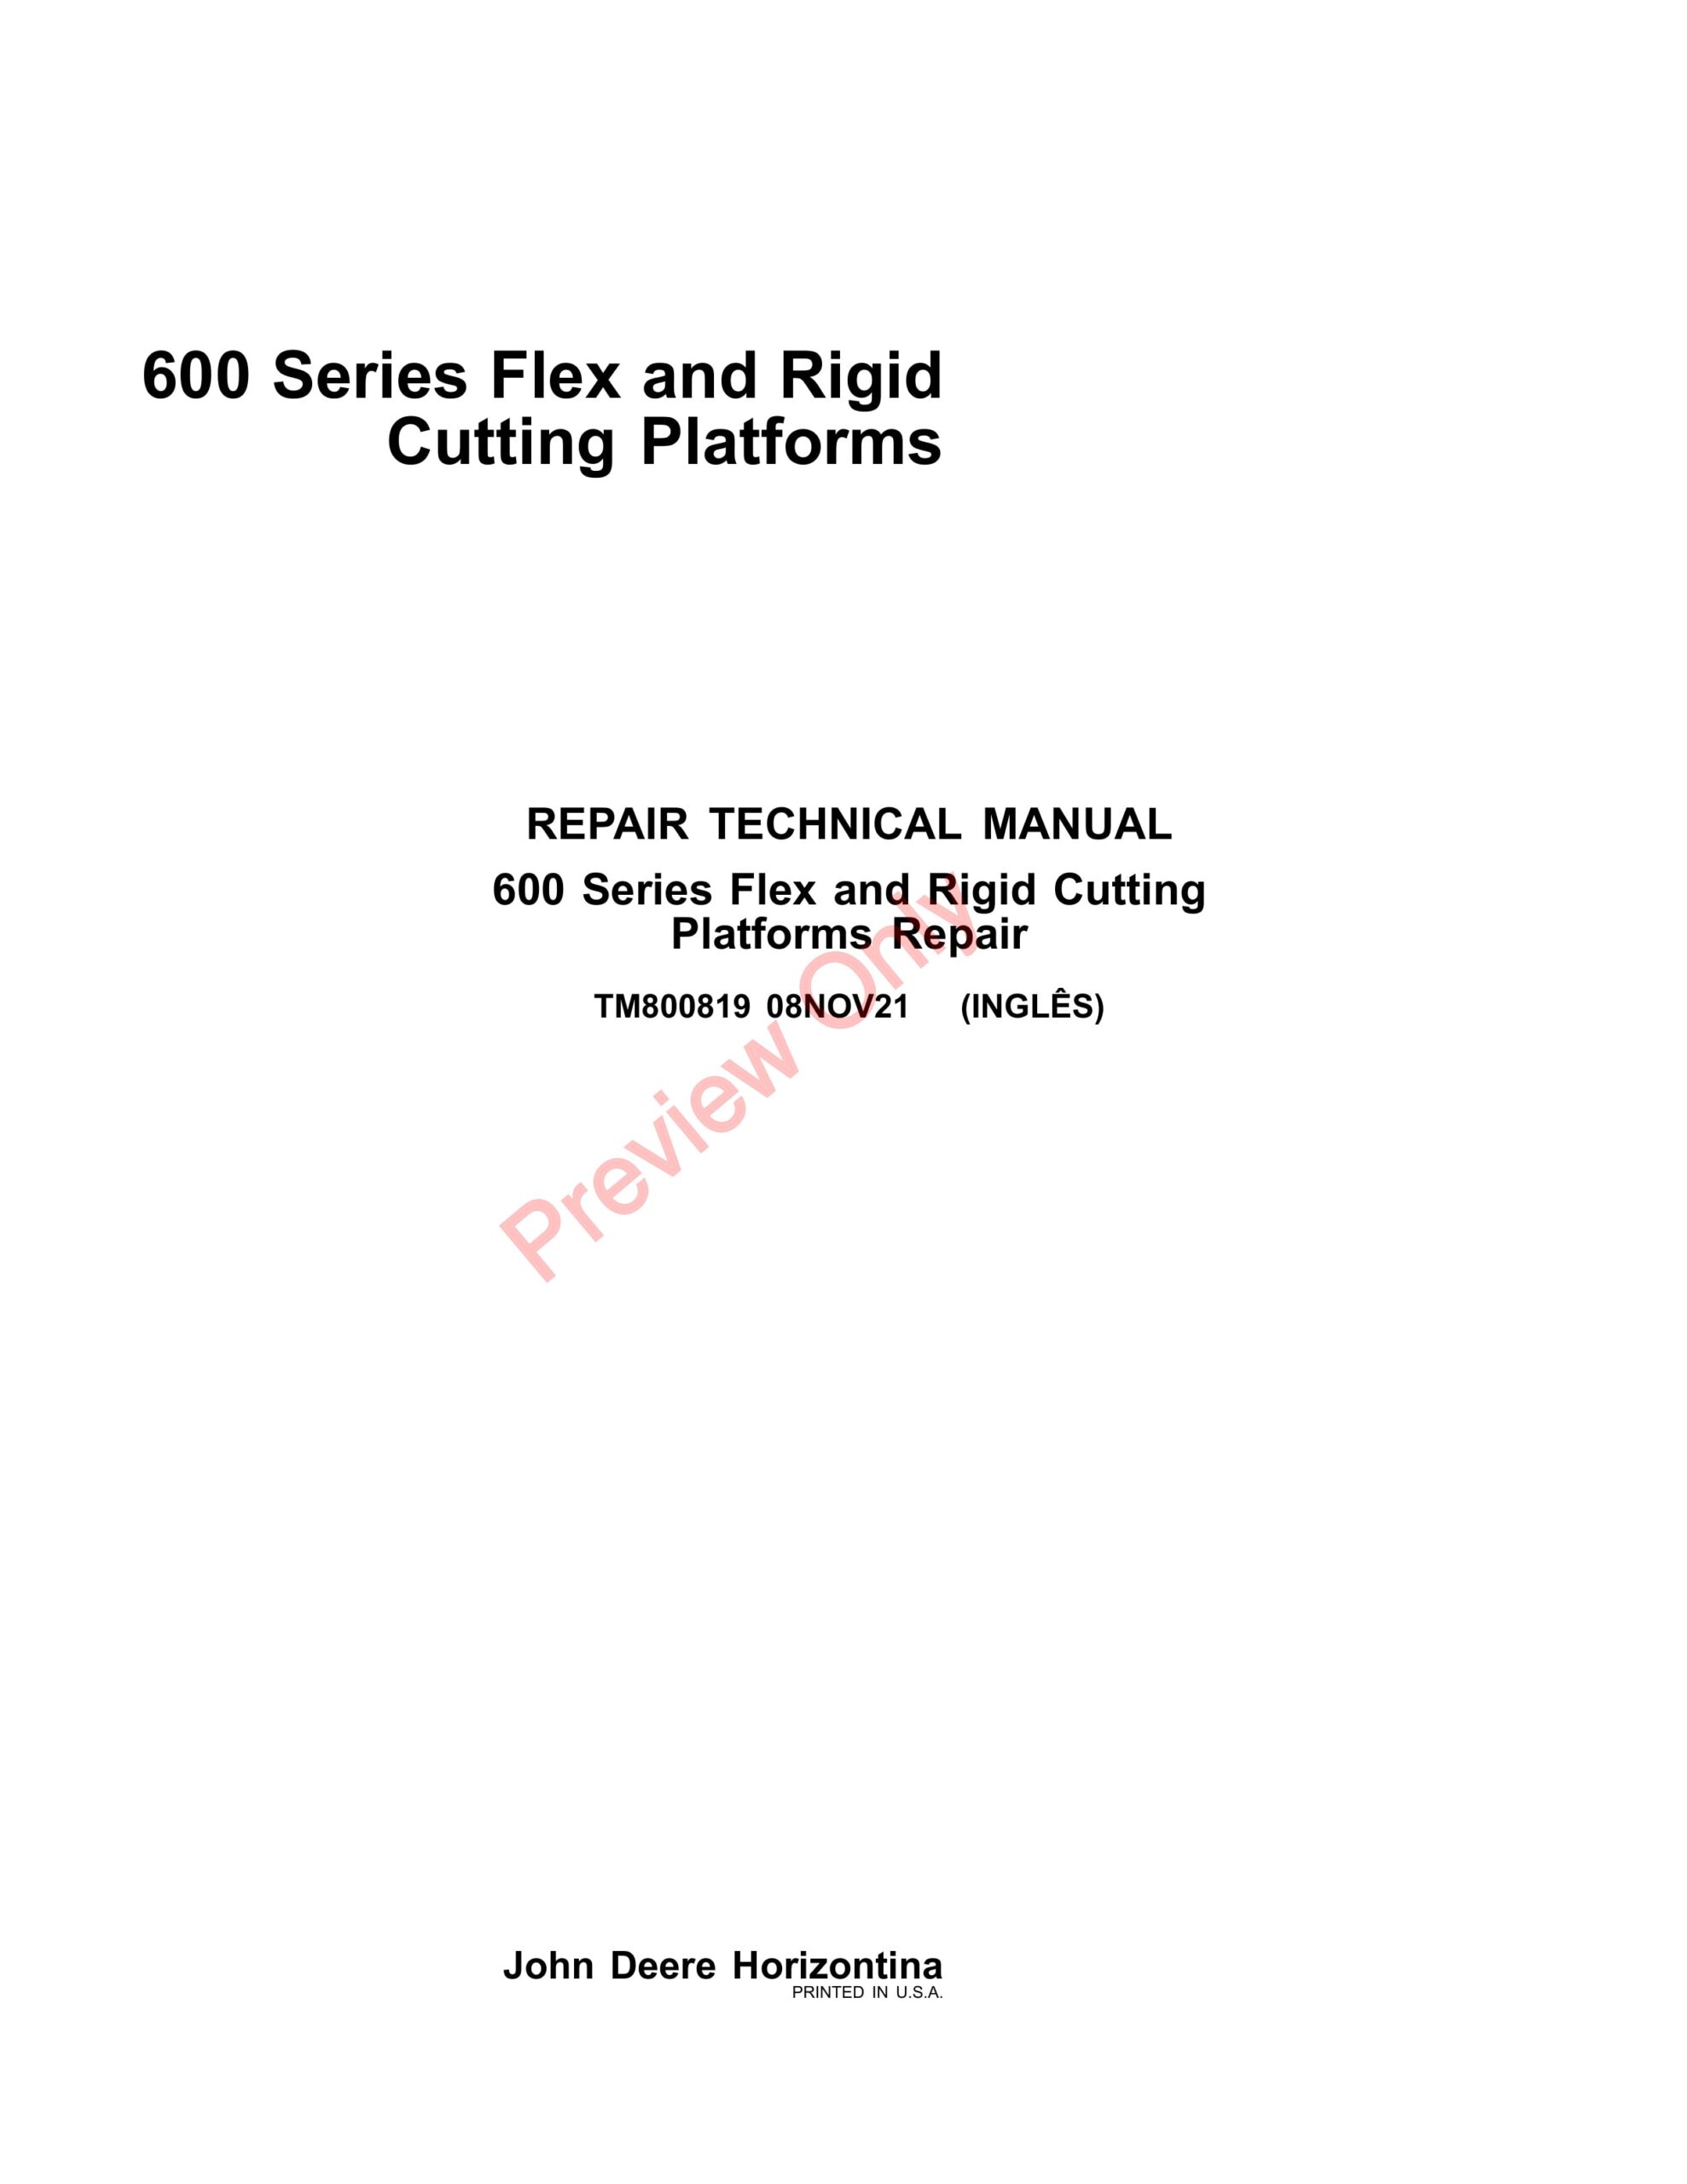 John Deere 600 Series Flex and Rigid Cutting Platforms Repair Technical Manual TM800819 08NOV21-1